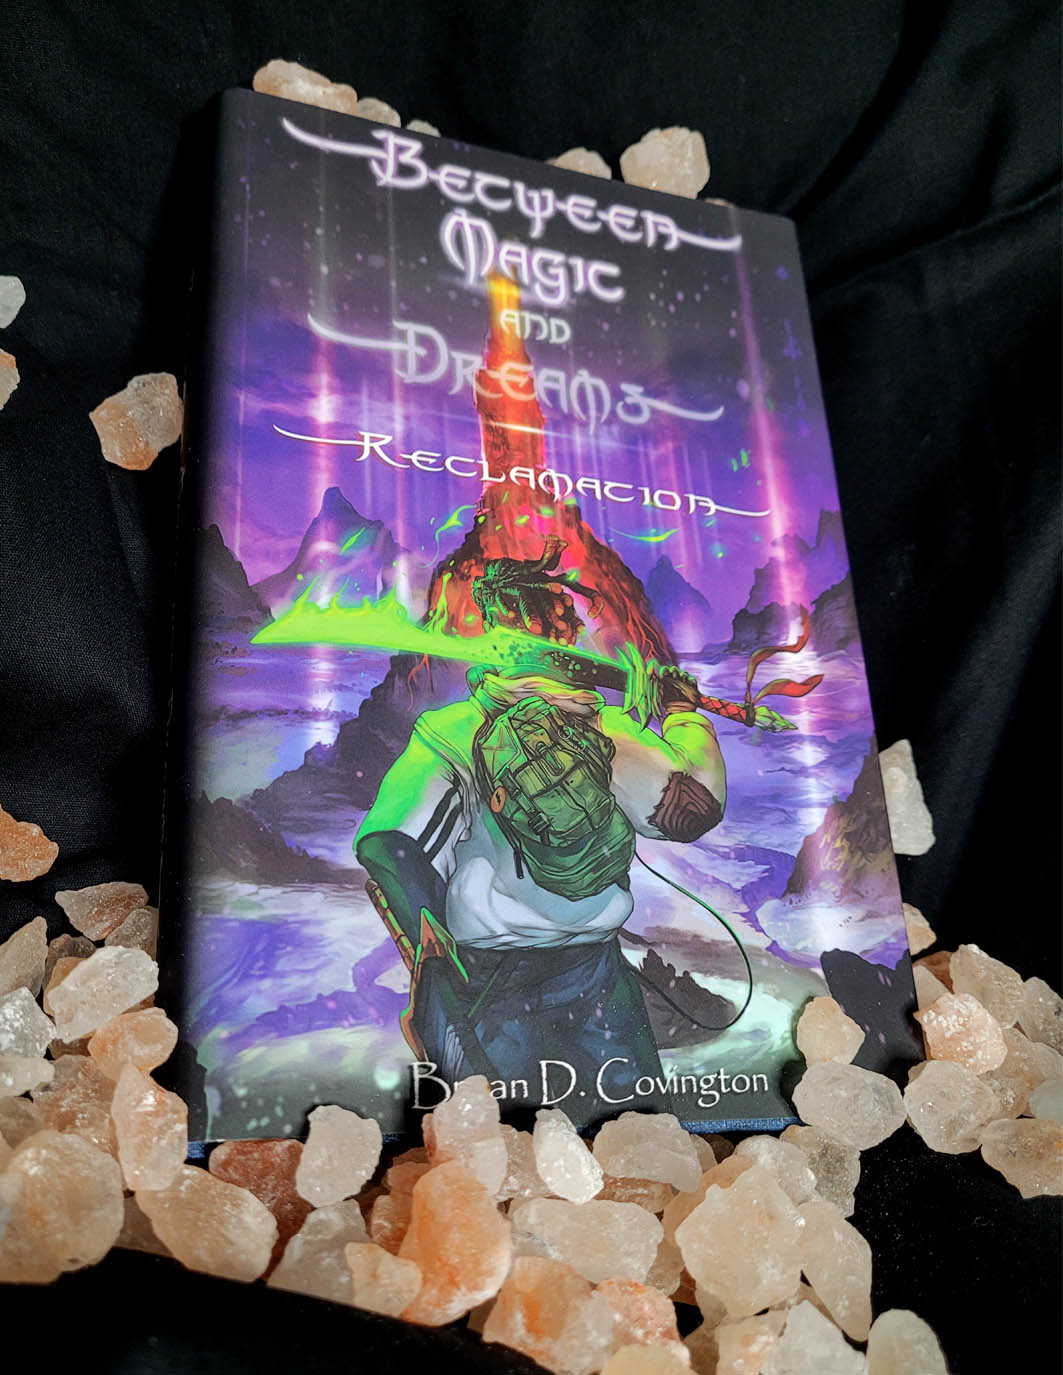 Between Magic and Dreams Volume 2 (Novel)